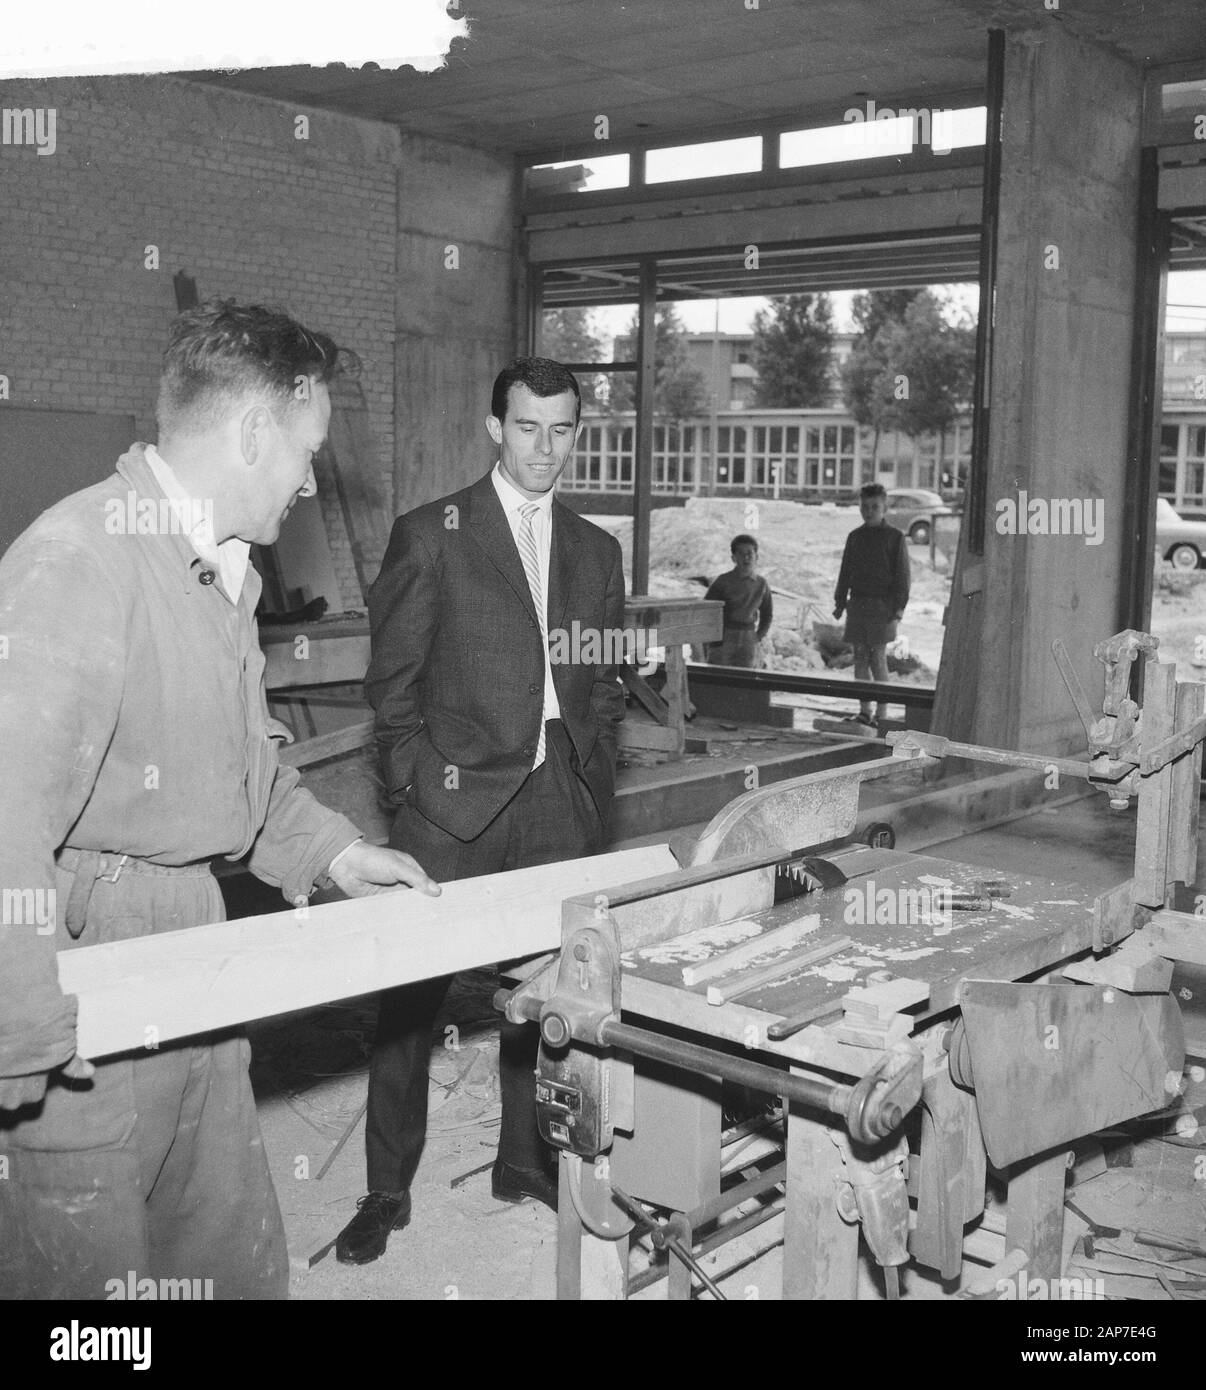 Coen Moulijn in his shop under construction Date: June 1, 1961 Location: Rotterdam, Zuid-Holland Keywords: construction, footballers, shops Personal name: Moulijn, Coen Stock Photo